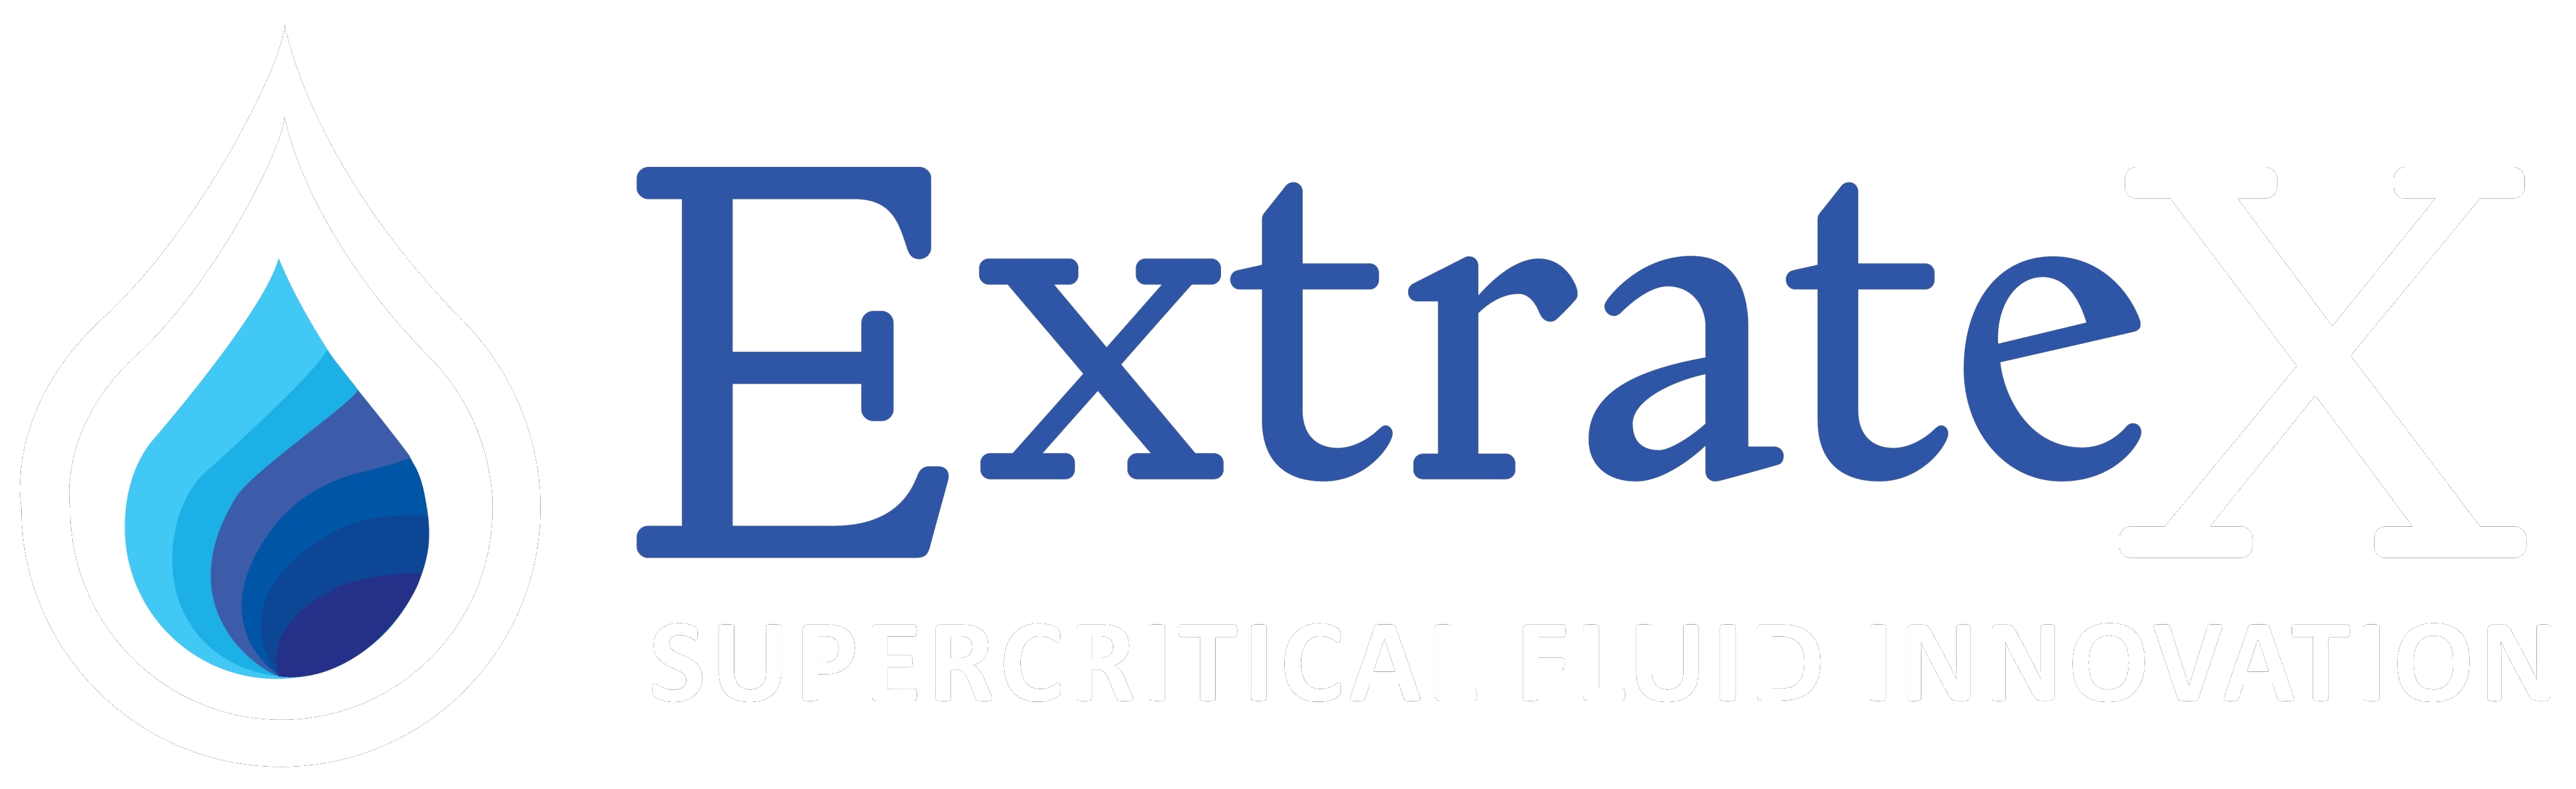 logo extratex